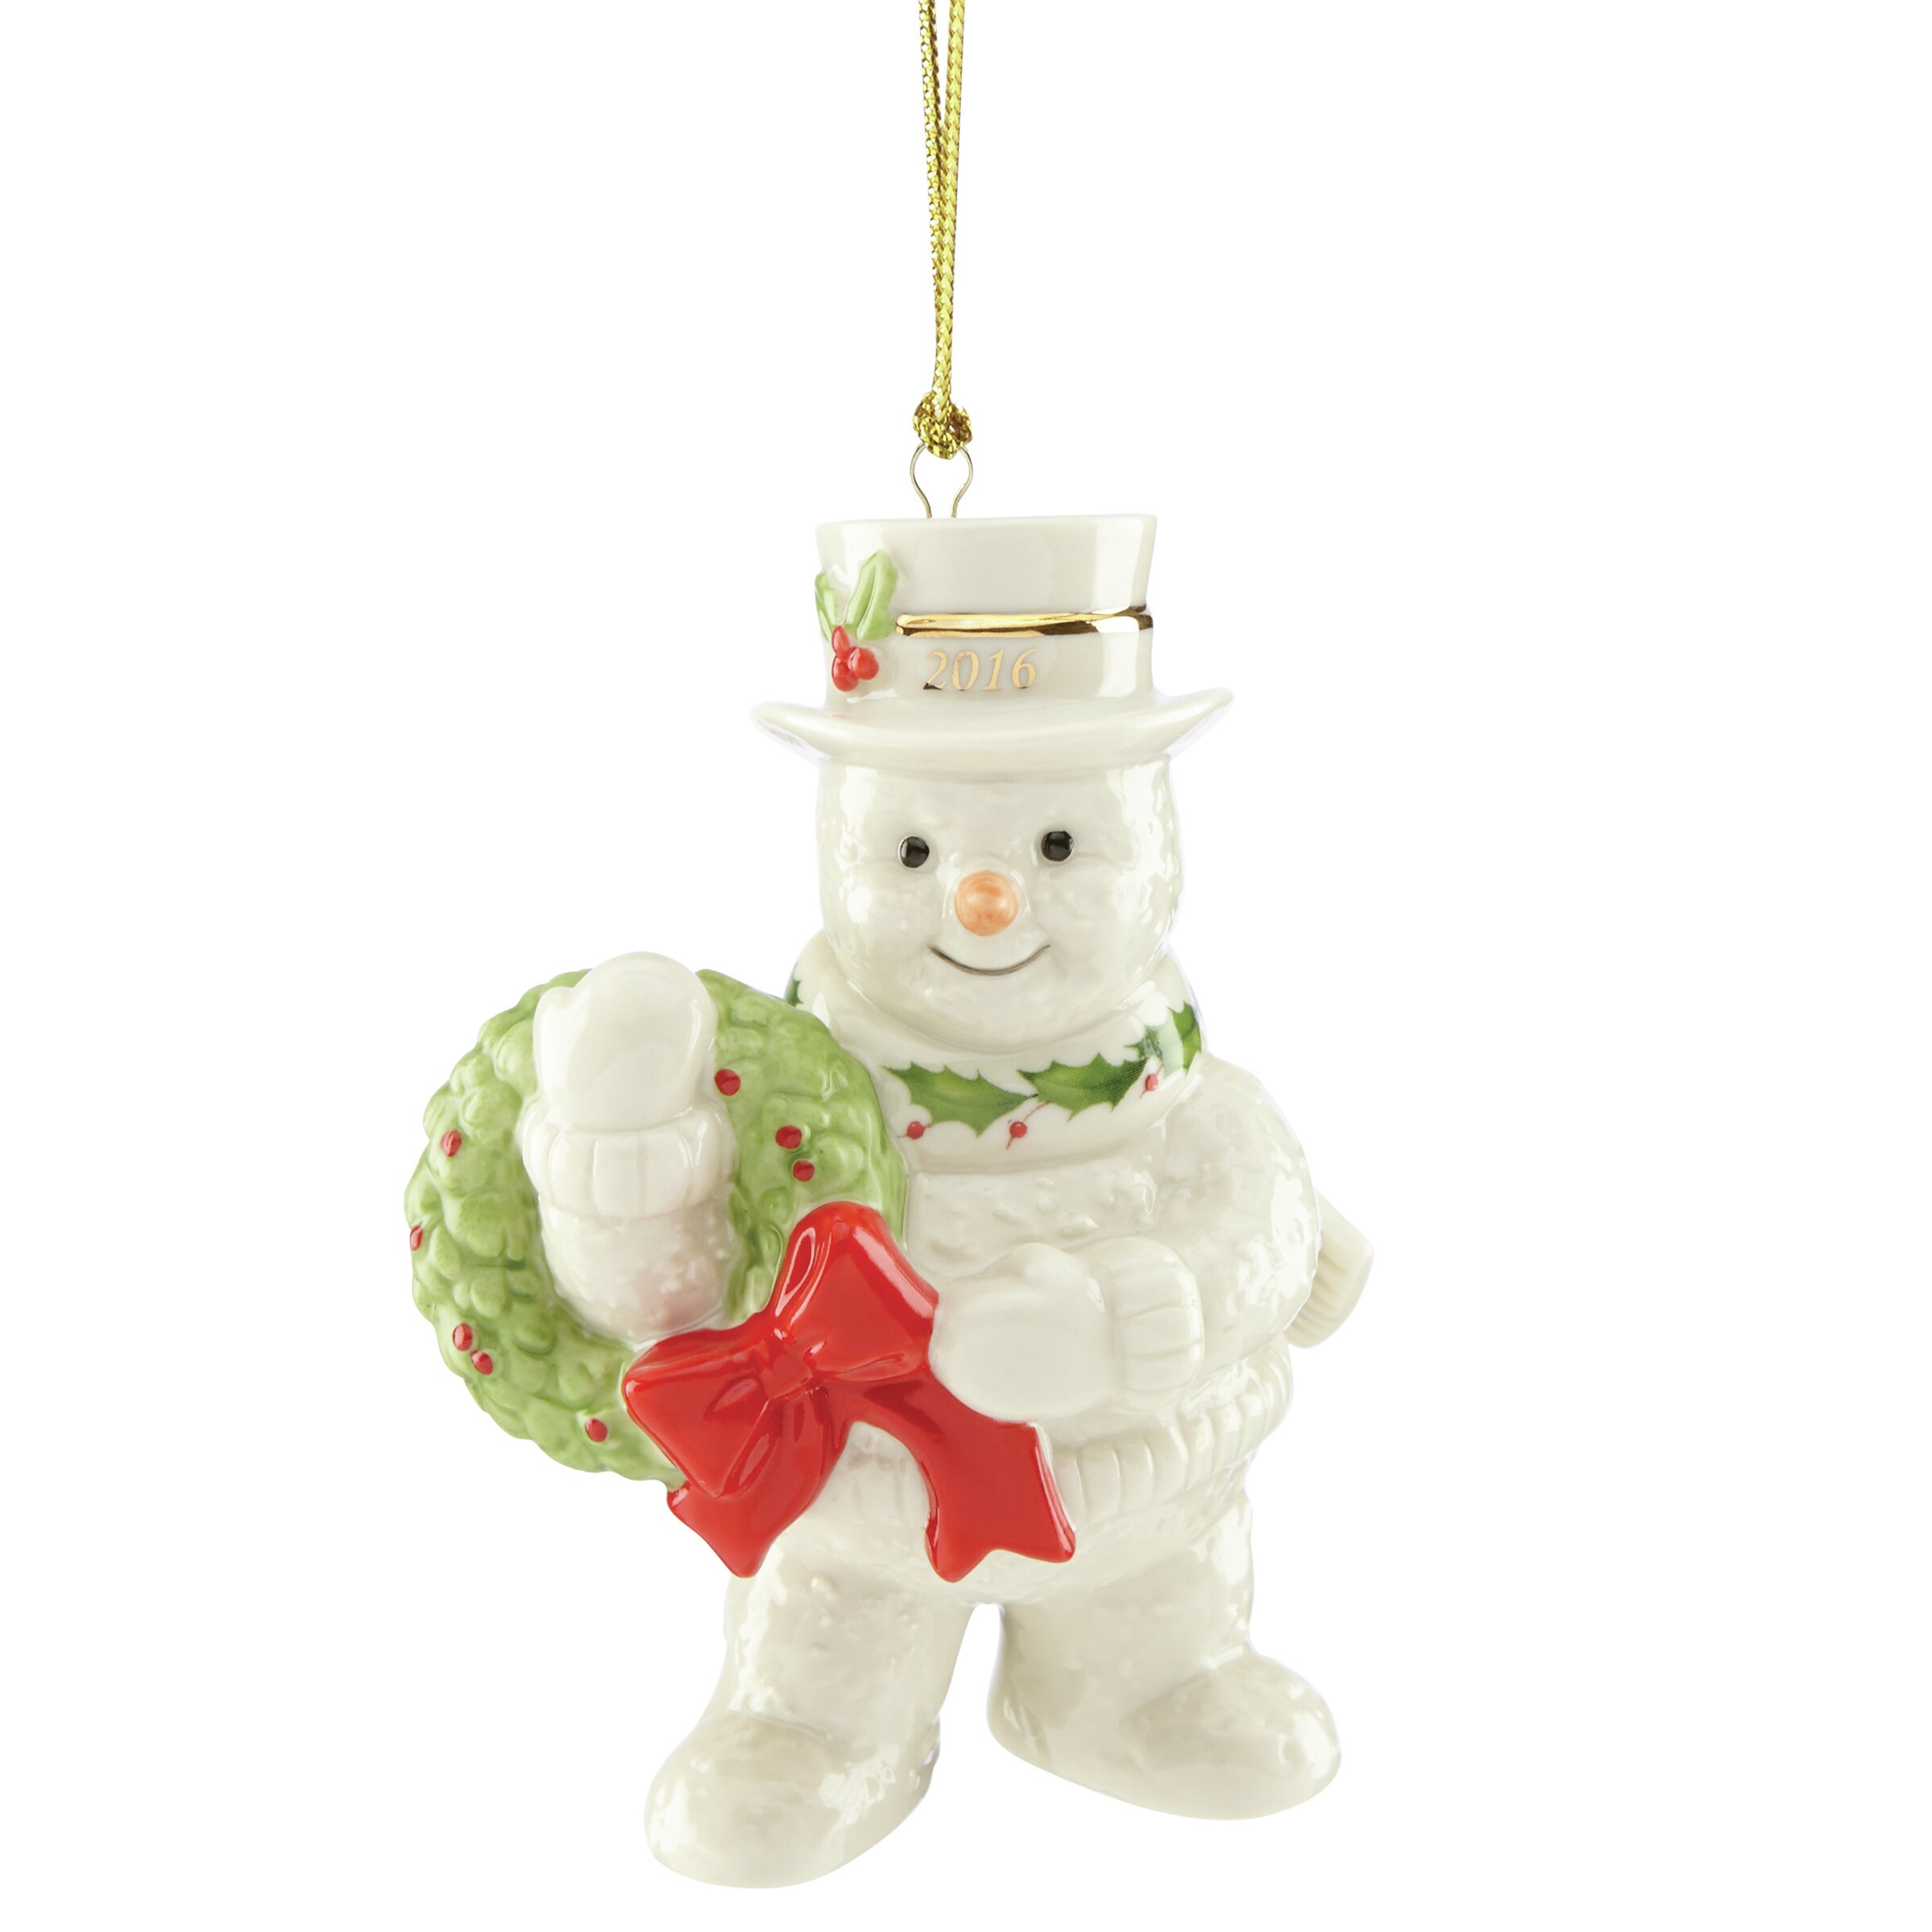 Lenox 2016 Happy Holly Days Snowman Ornament & Reviews | Wayfair